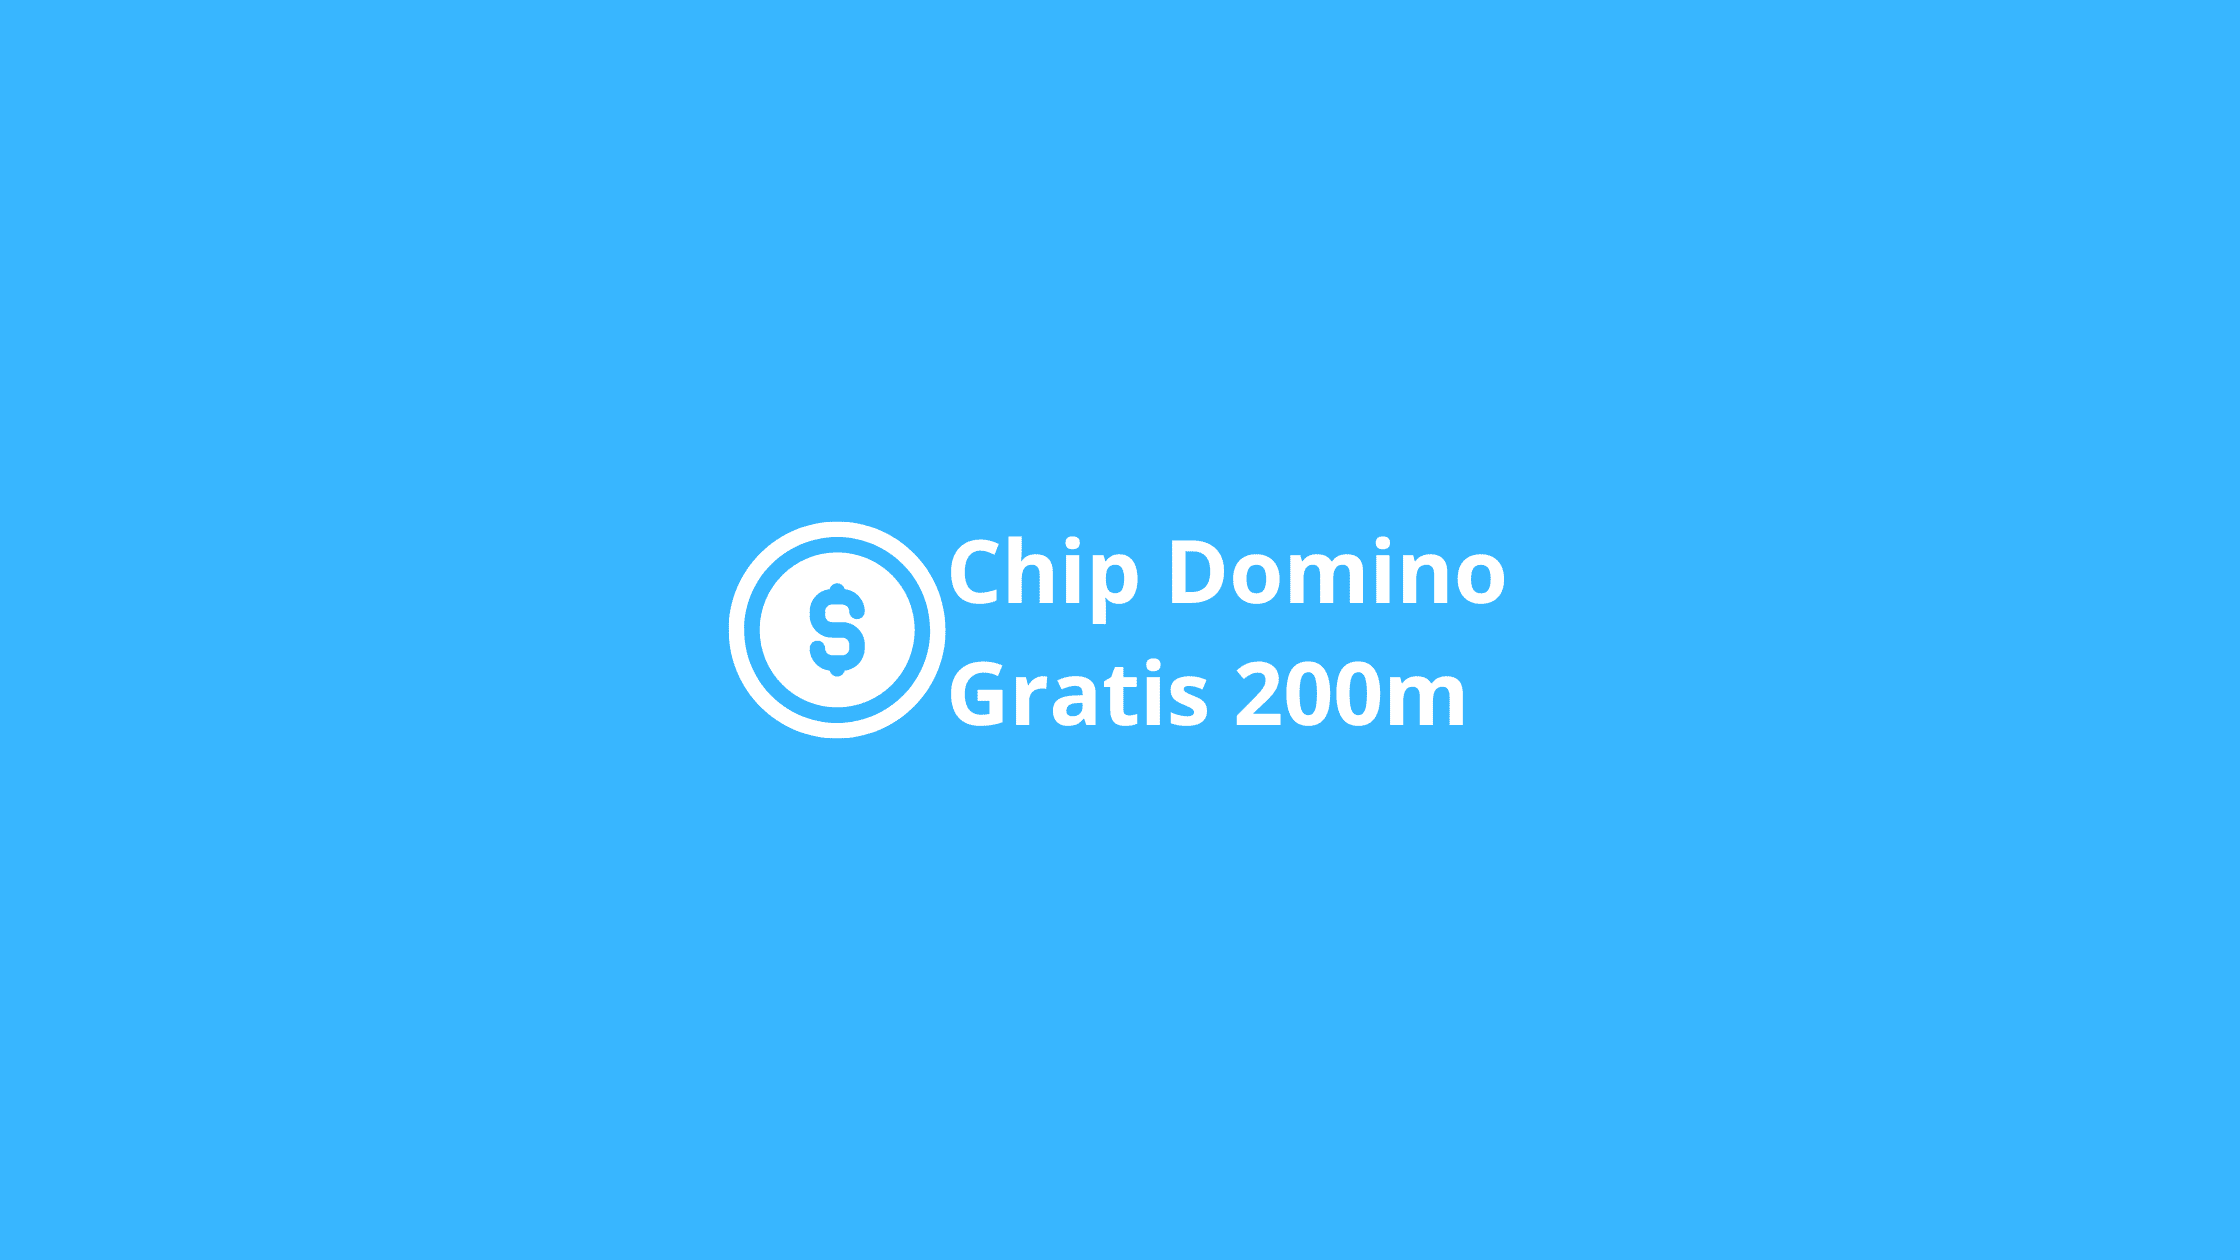 Chip Domino Gratis 200m